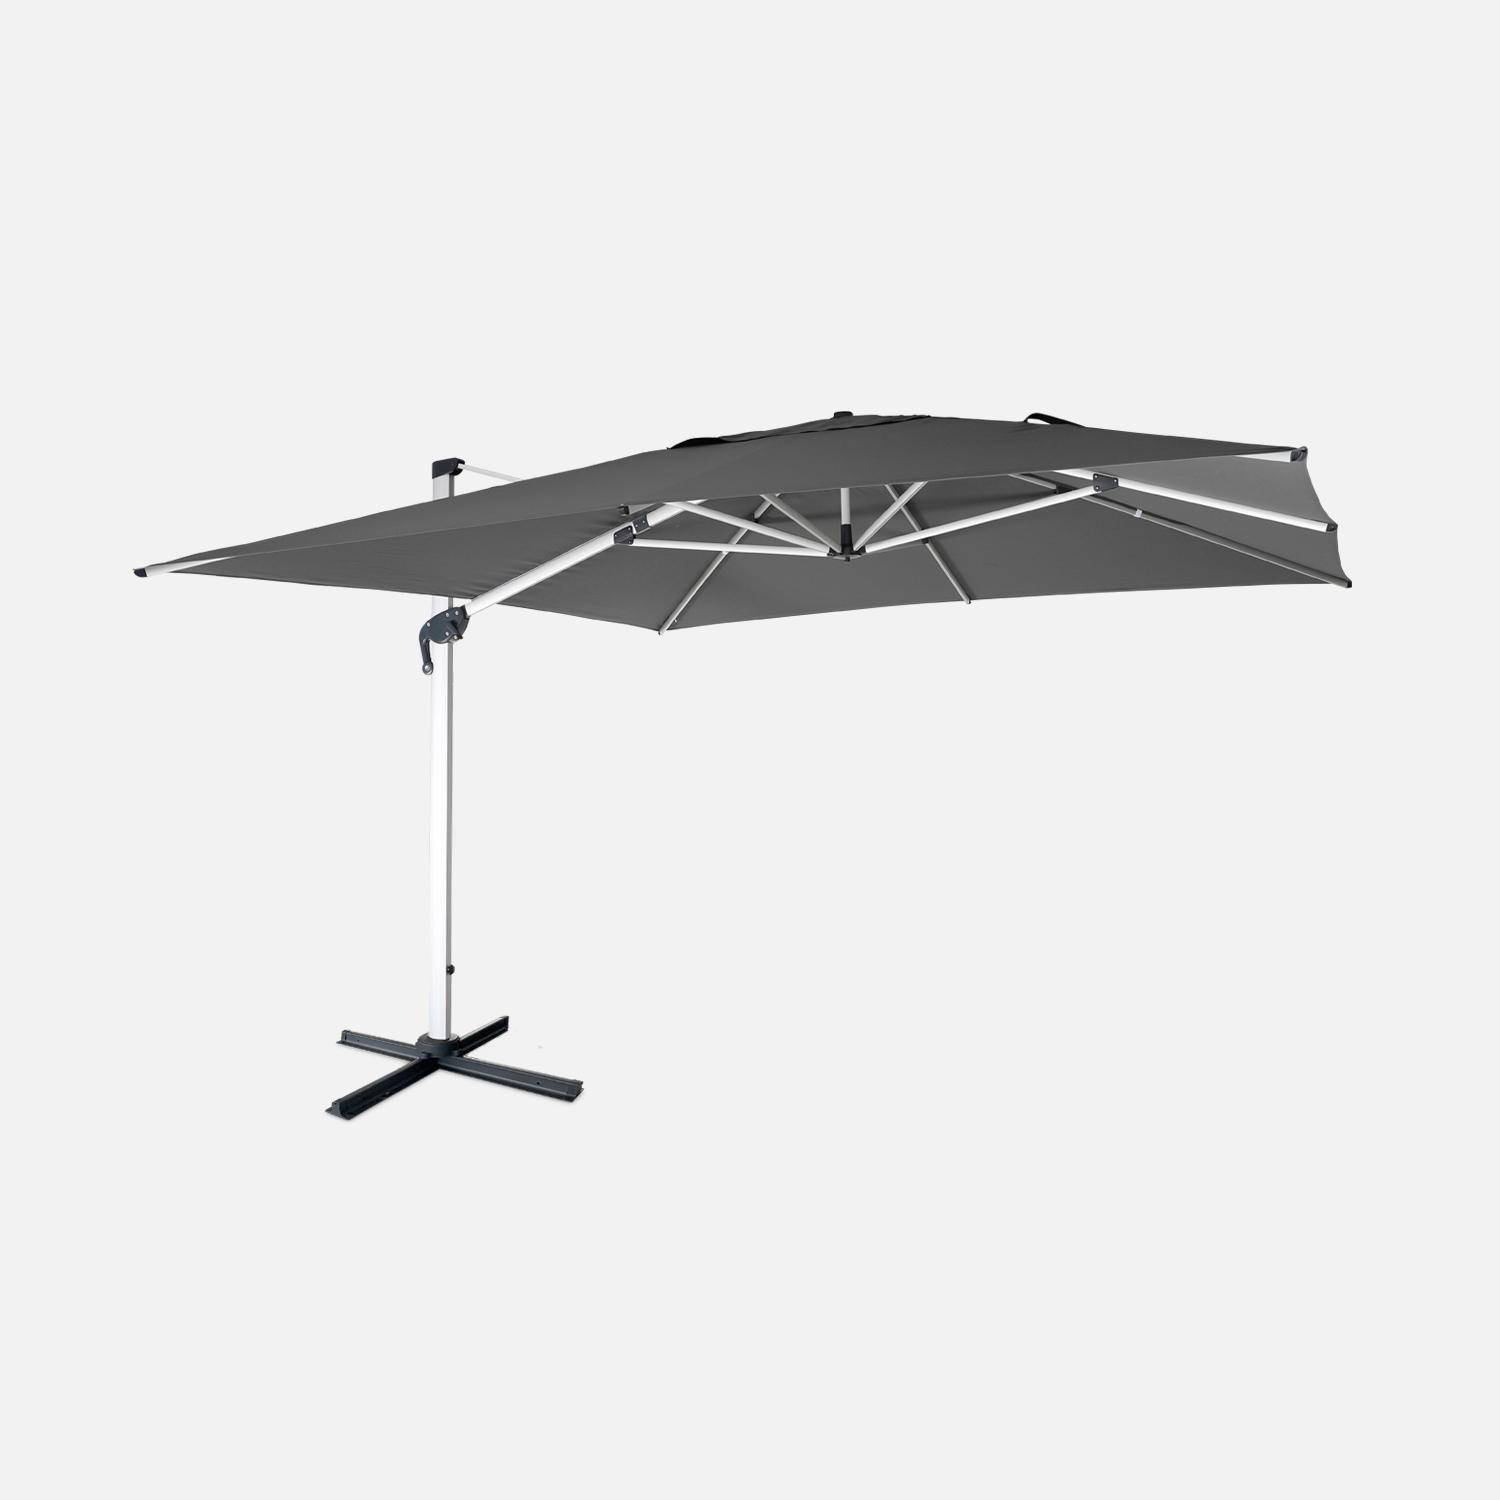 Topklasse parasol, 4x4m, grijs polyester doek, geanodiseerd aluminium frame, hoes inbegrepen Photo1